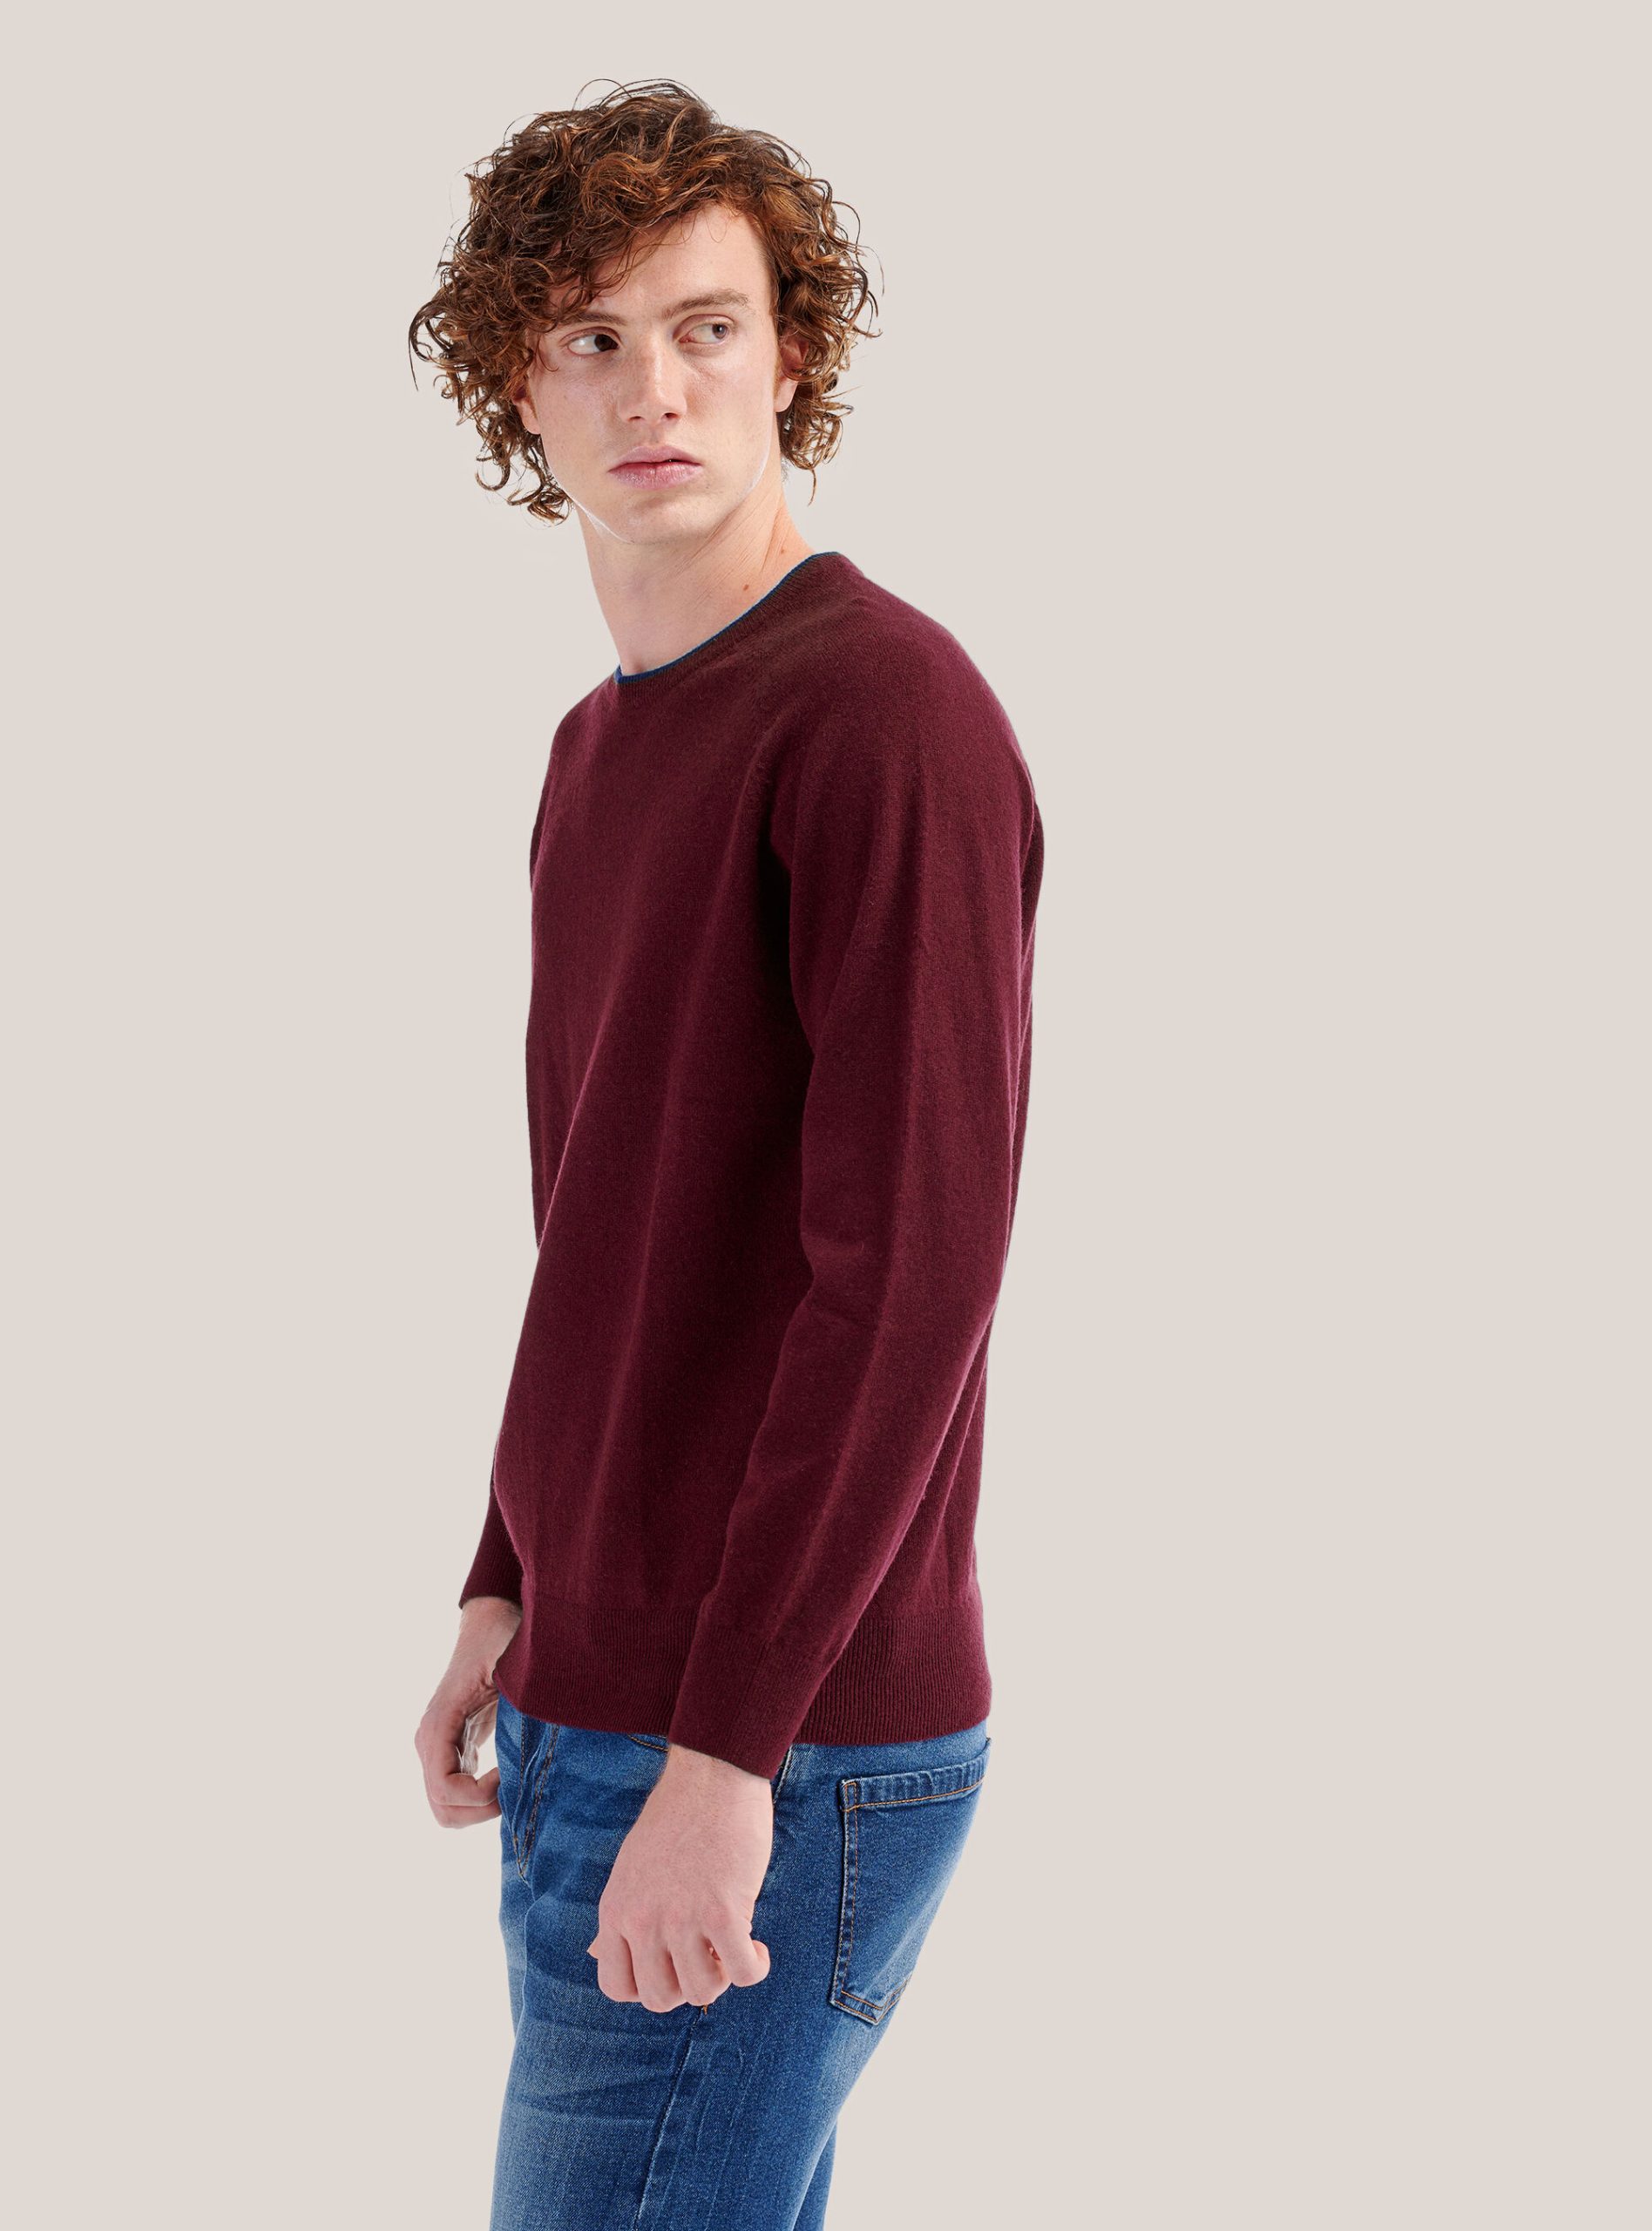 Round Neck Sweater With Contrasting Border Norm Alcott C3307 Wine Strickwaren Männer – 1